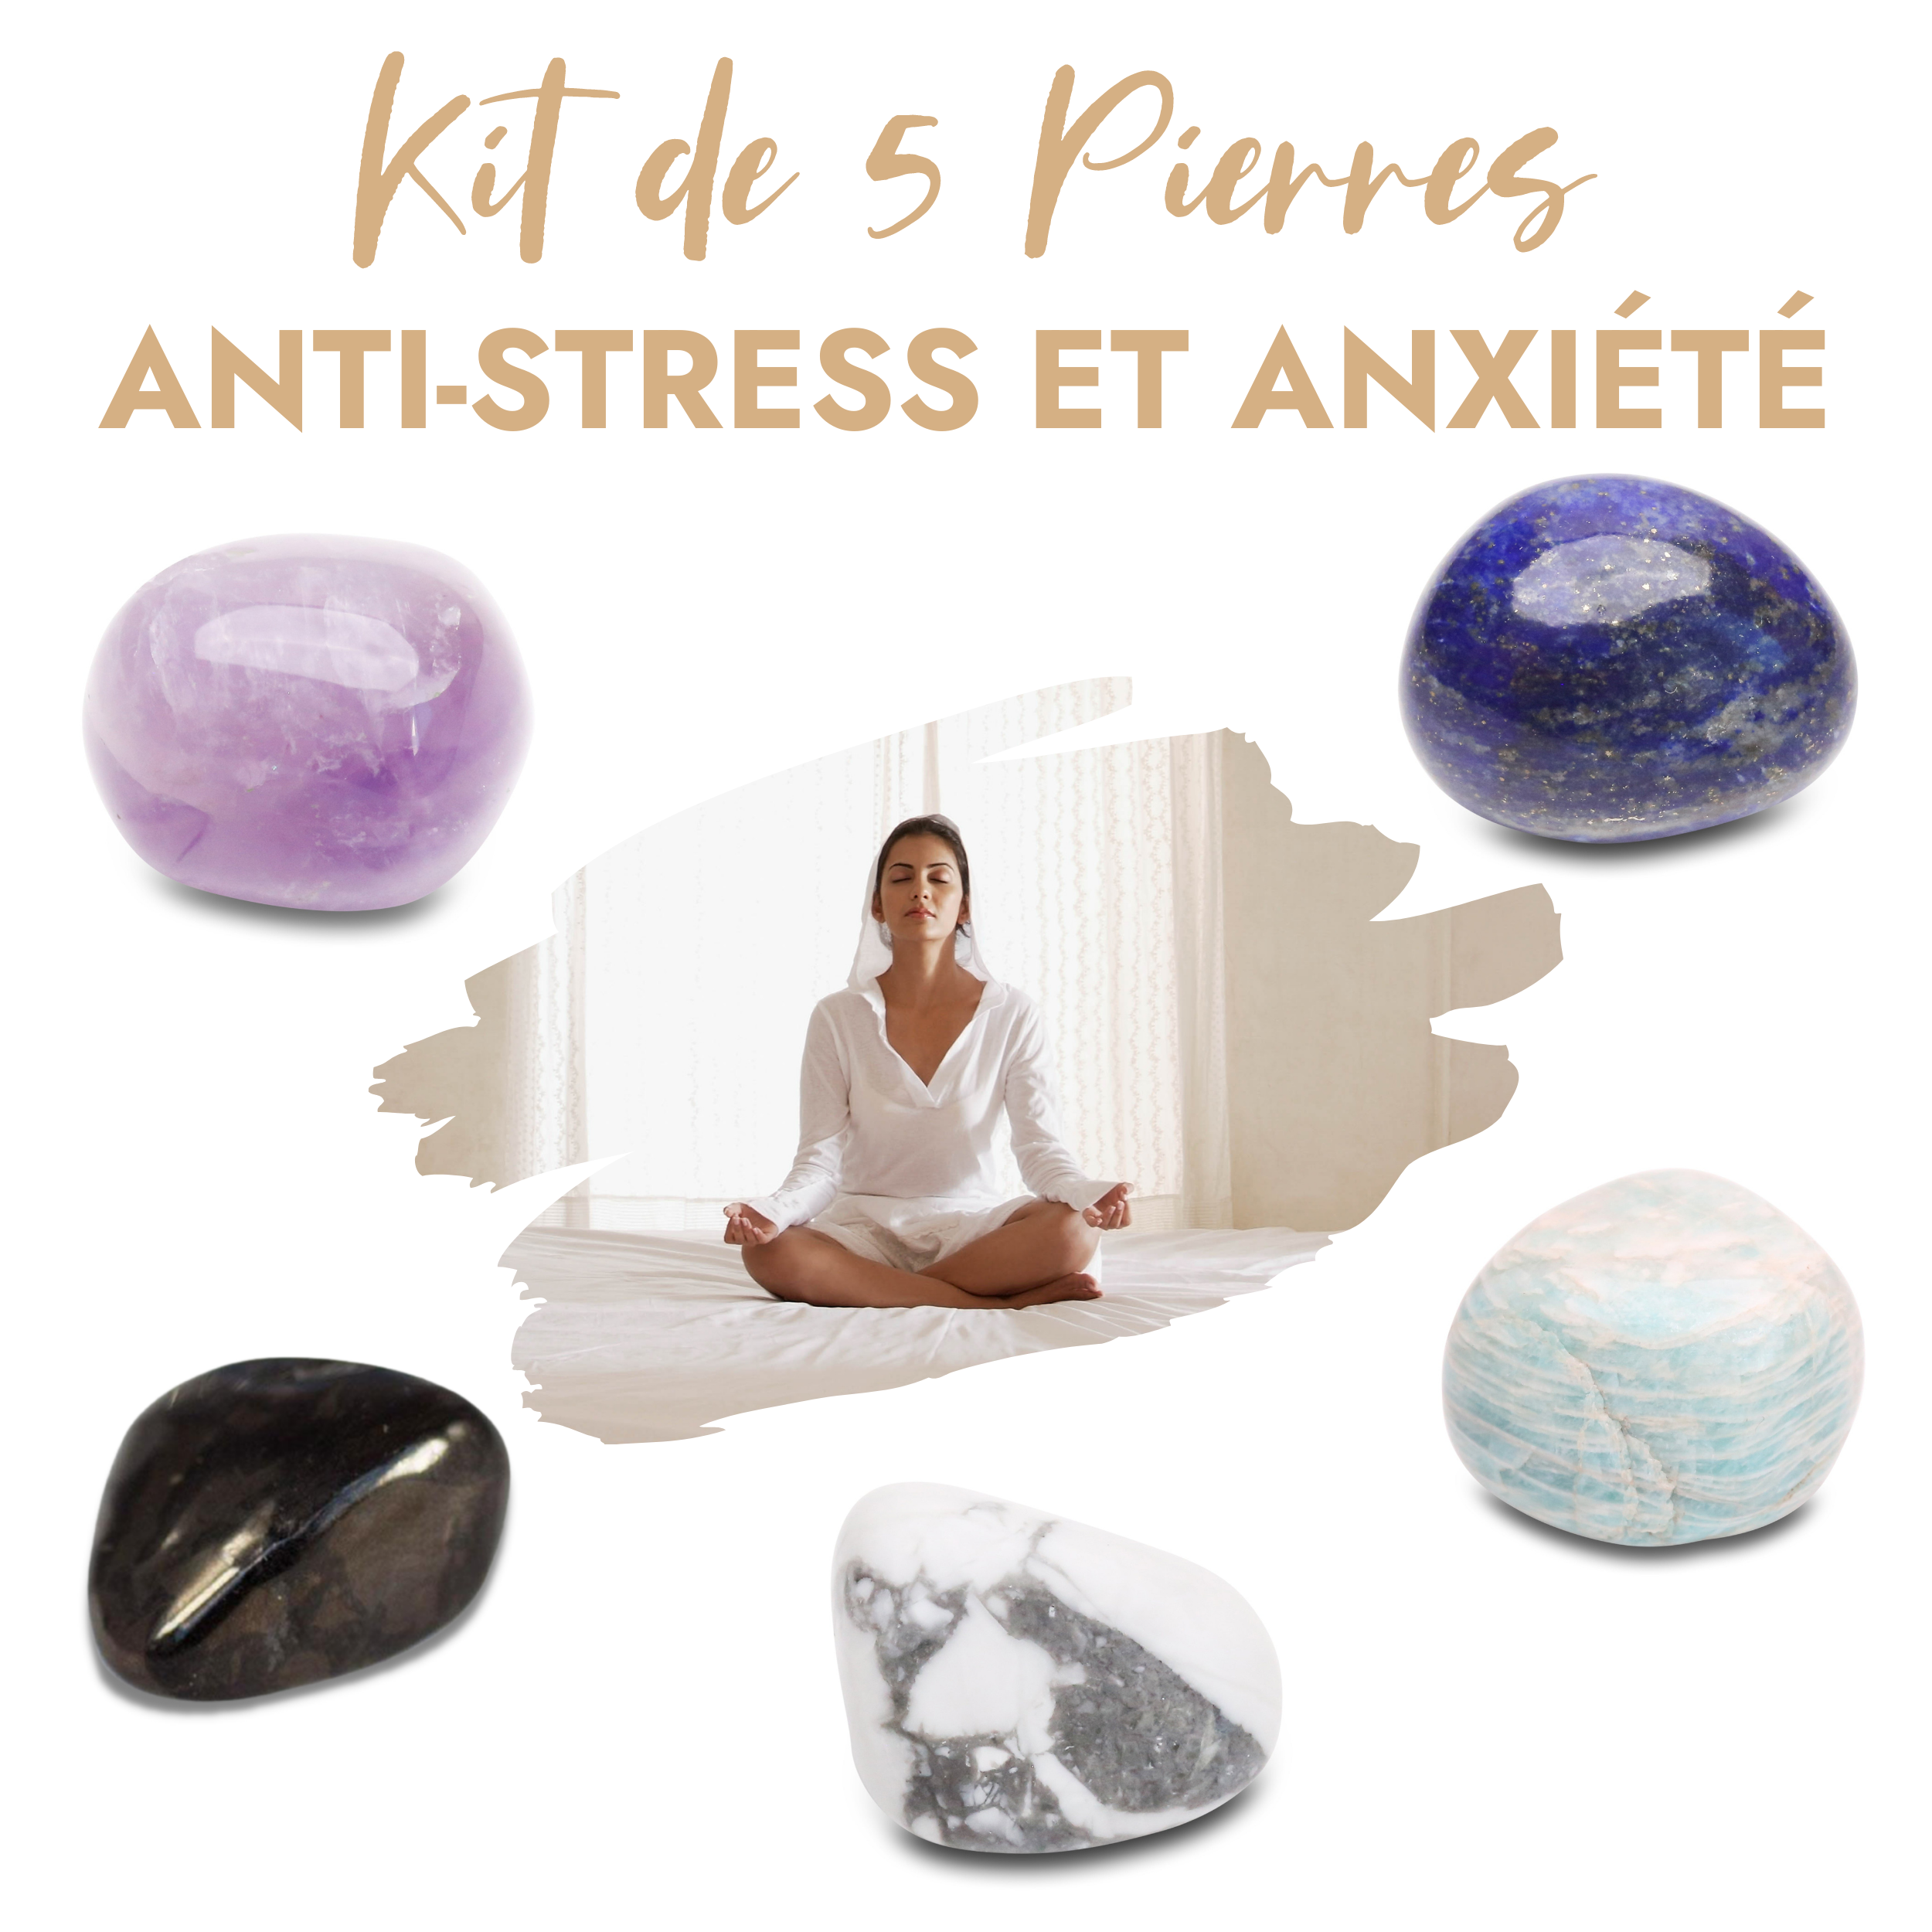 Kit de 5 pierres “Anti-Stress et Anxiété” – Karma Yoga Shop